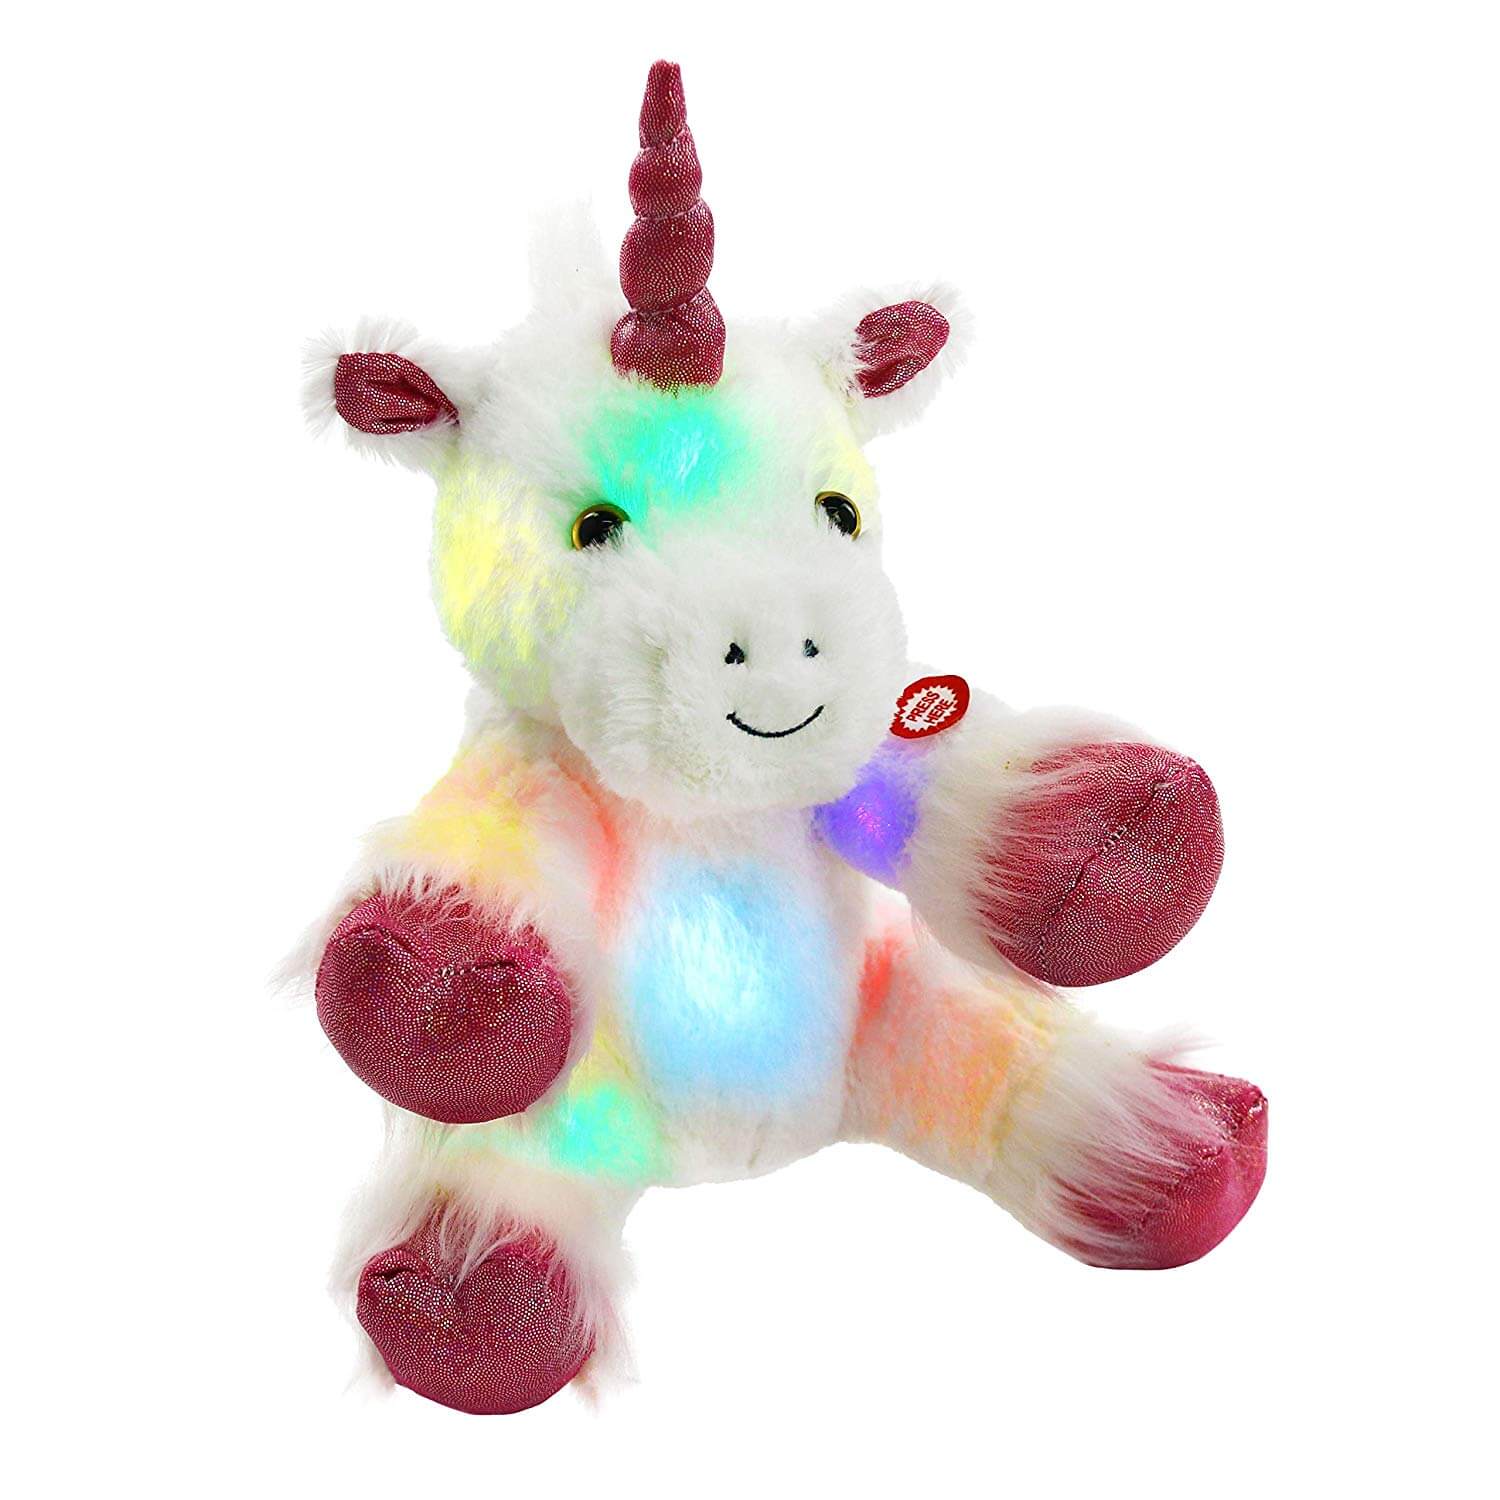 Unicorn Stuffed Animal Night Light Up Plush Gifts for Girls Rainbow Lites  12 inch